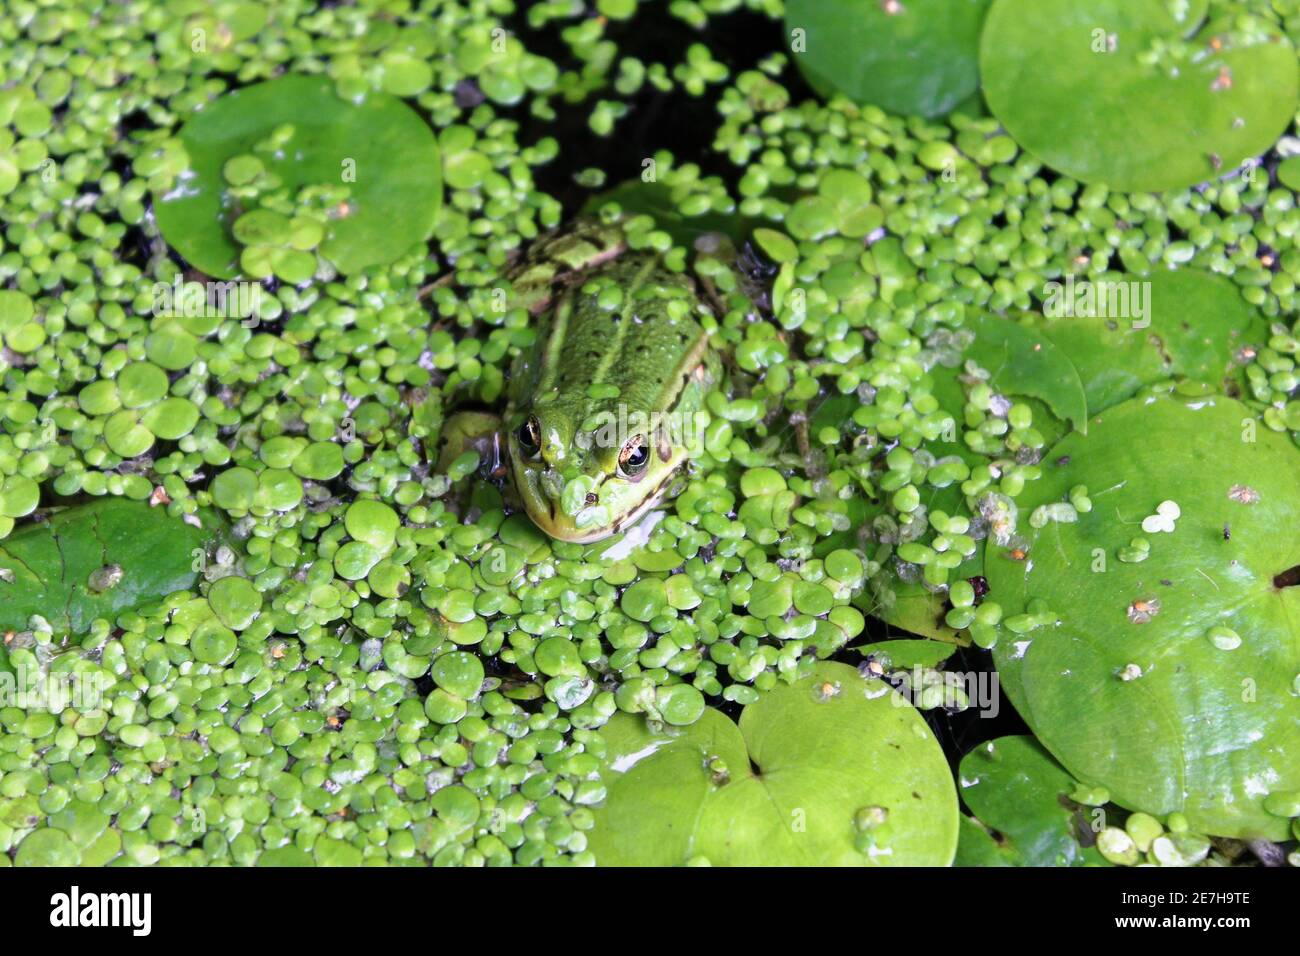 Rana verde (Rana clamitans) en un estanque rodeado de maleza Foto de stock